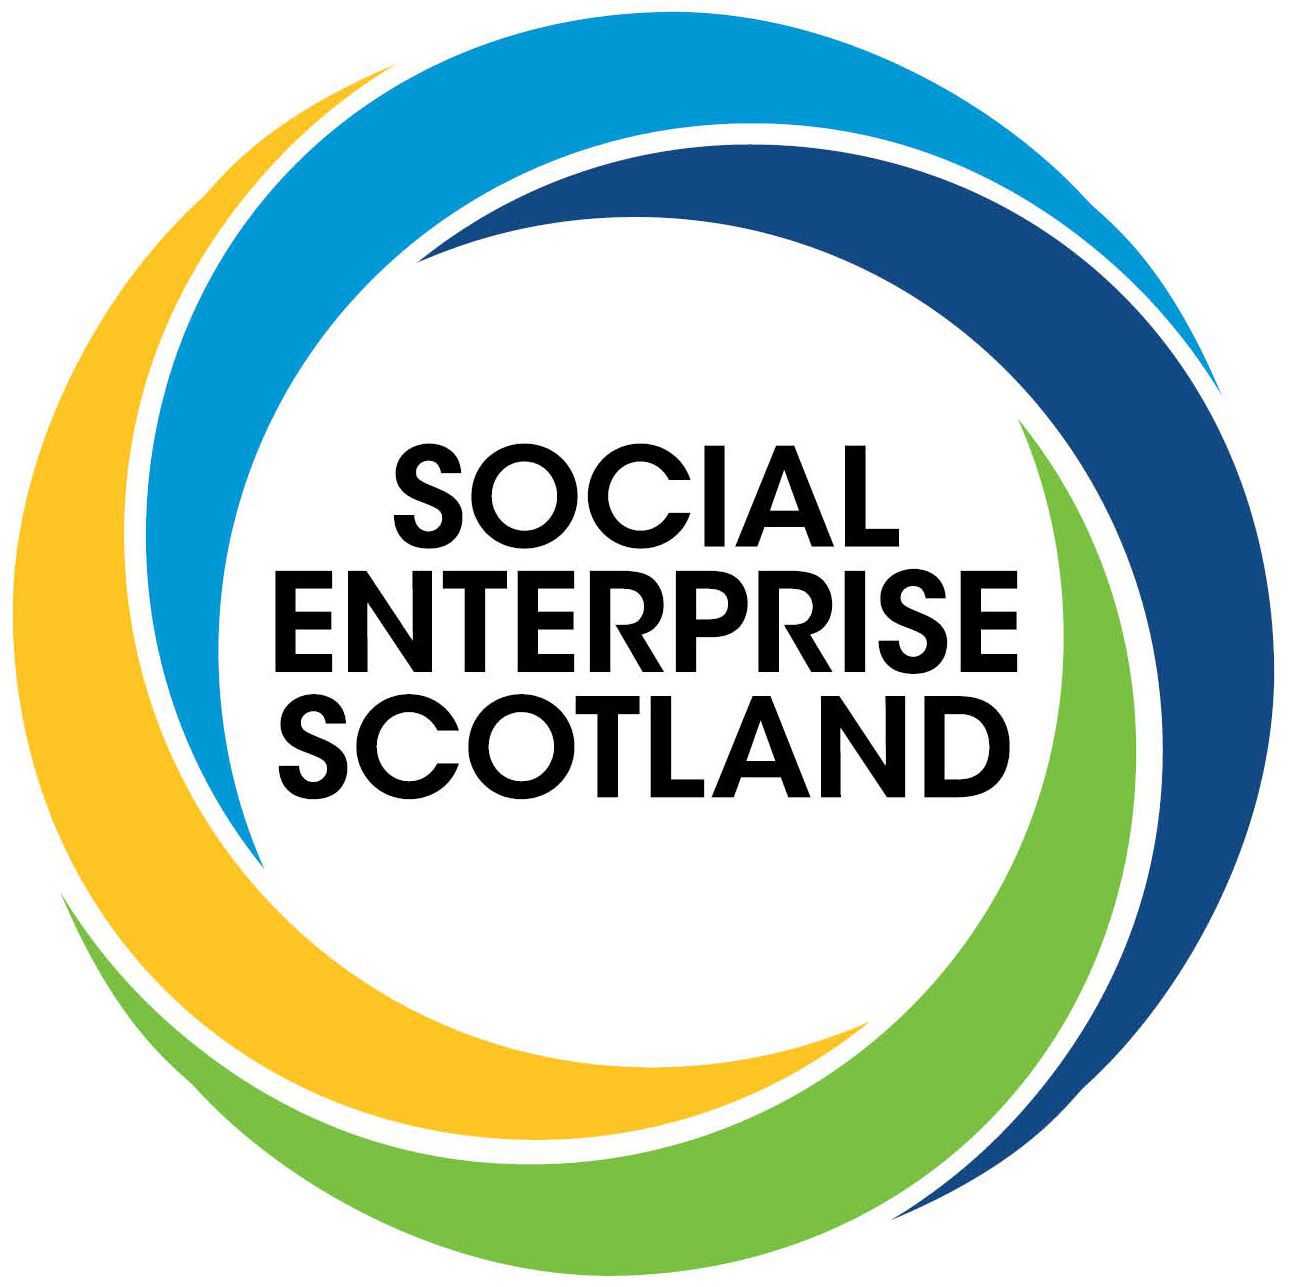 Social enterprise scotland member